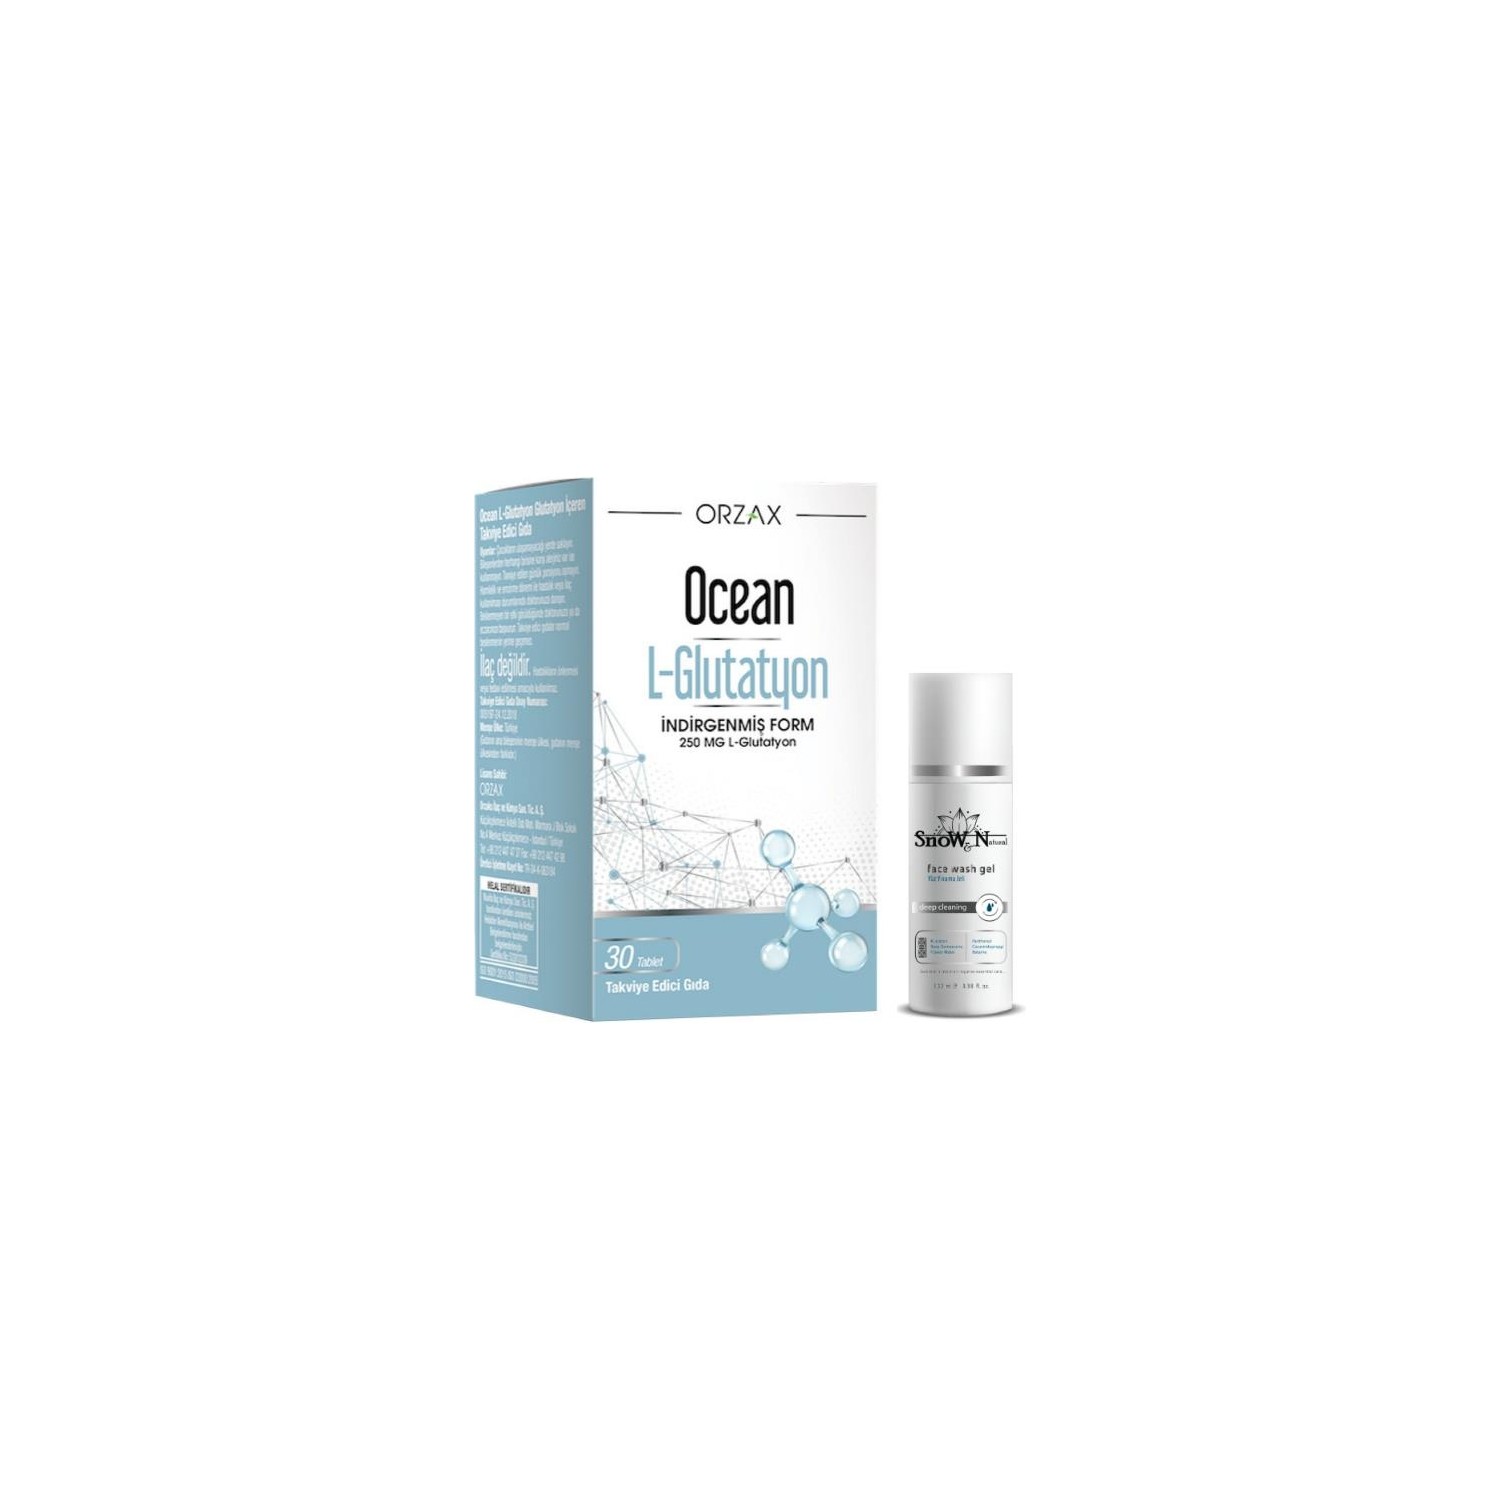 L-глутатион Orzax 250 мг, 30 таблеток + Очищающий гель для лица, 100 мл l глутатион orzax ocean 250 мг 2 упаковки по 30 таблеток